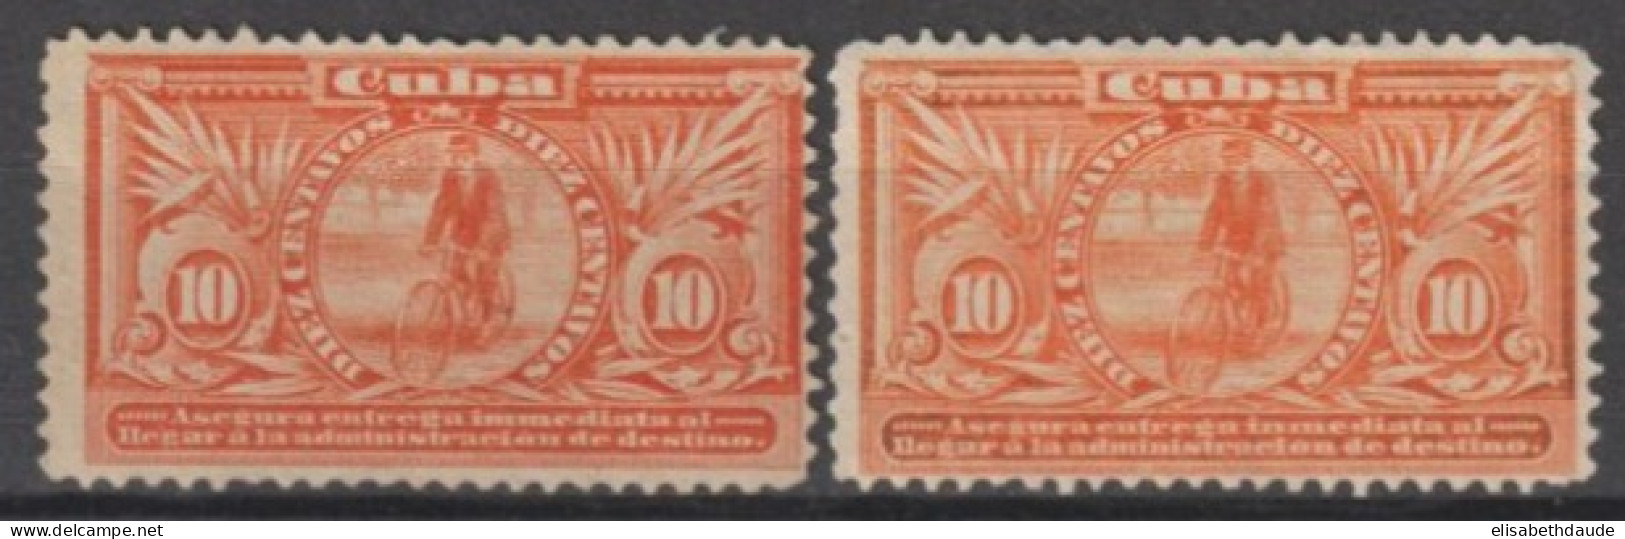 C UBA - 1899 - EXPRES - YVERT N°2 + VARIETE "IMMEDIATA" 2a (*) SANS GOMME - COTE = 65 EUR - Exprespost